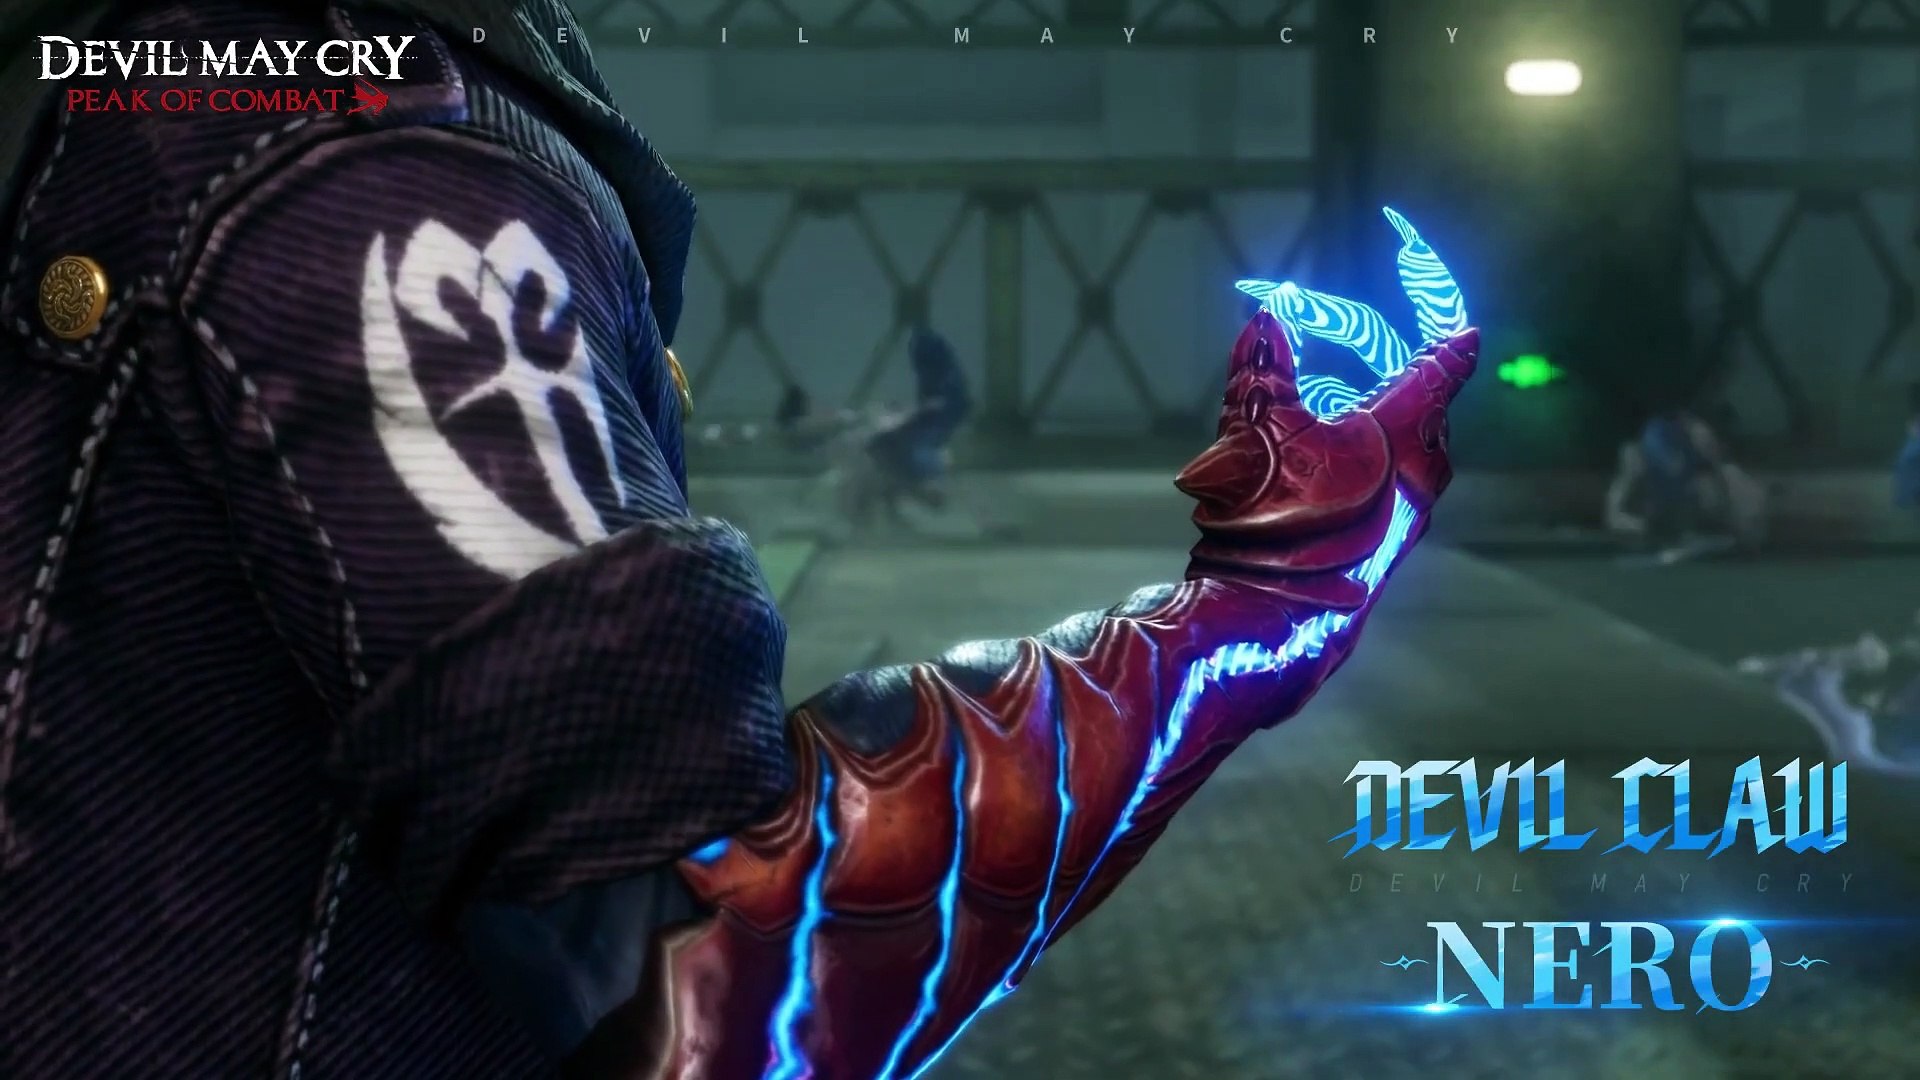 Devil May Cry 5 - Nero Combat Video 